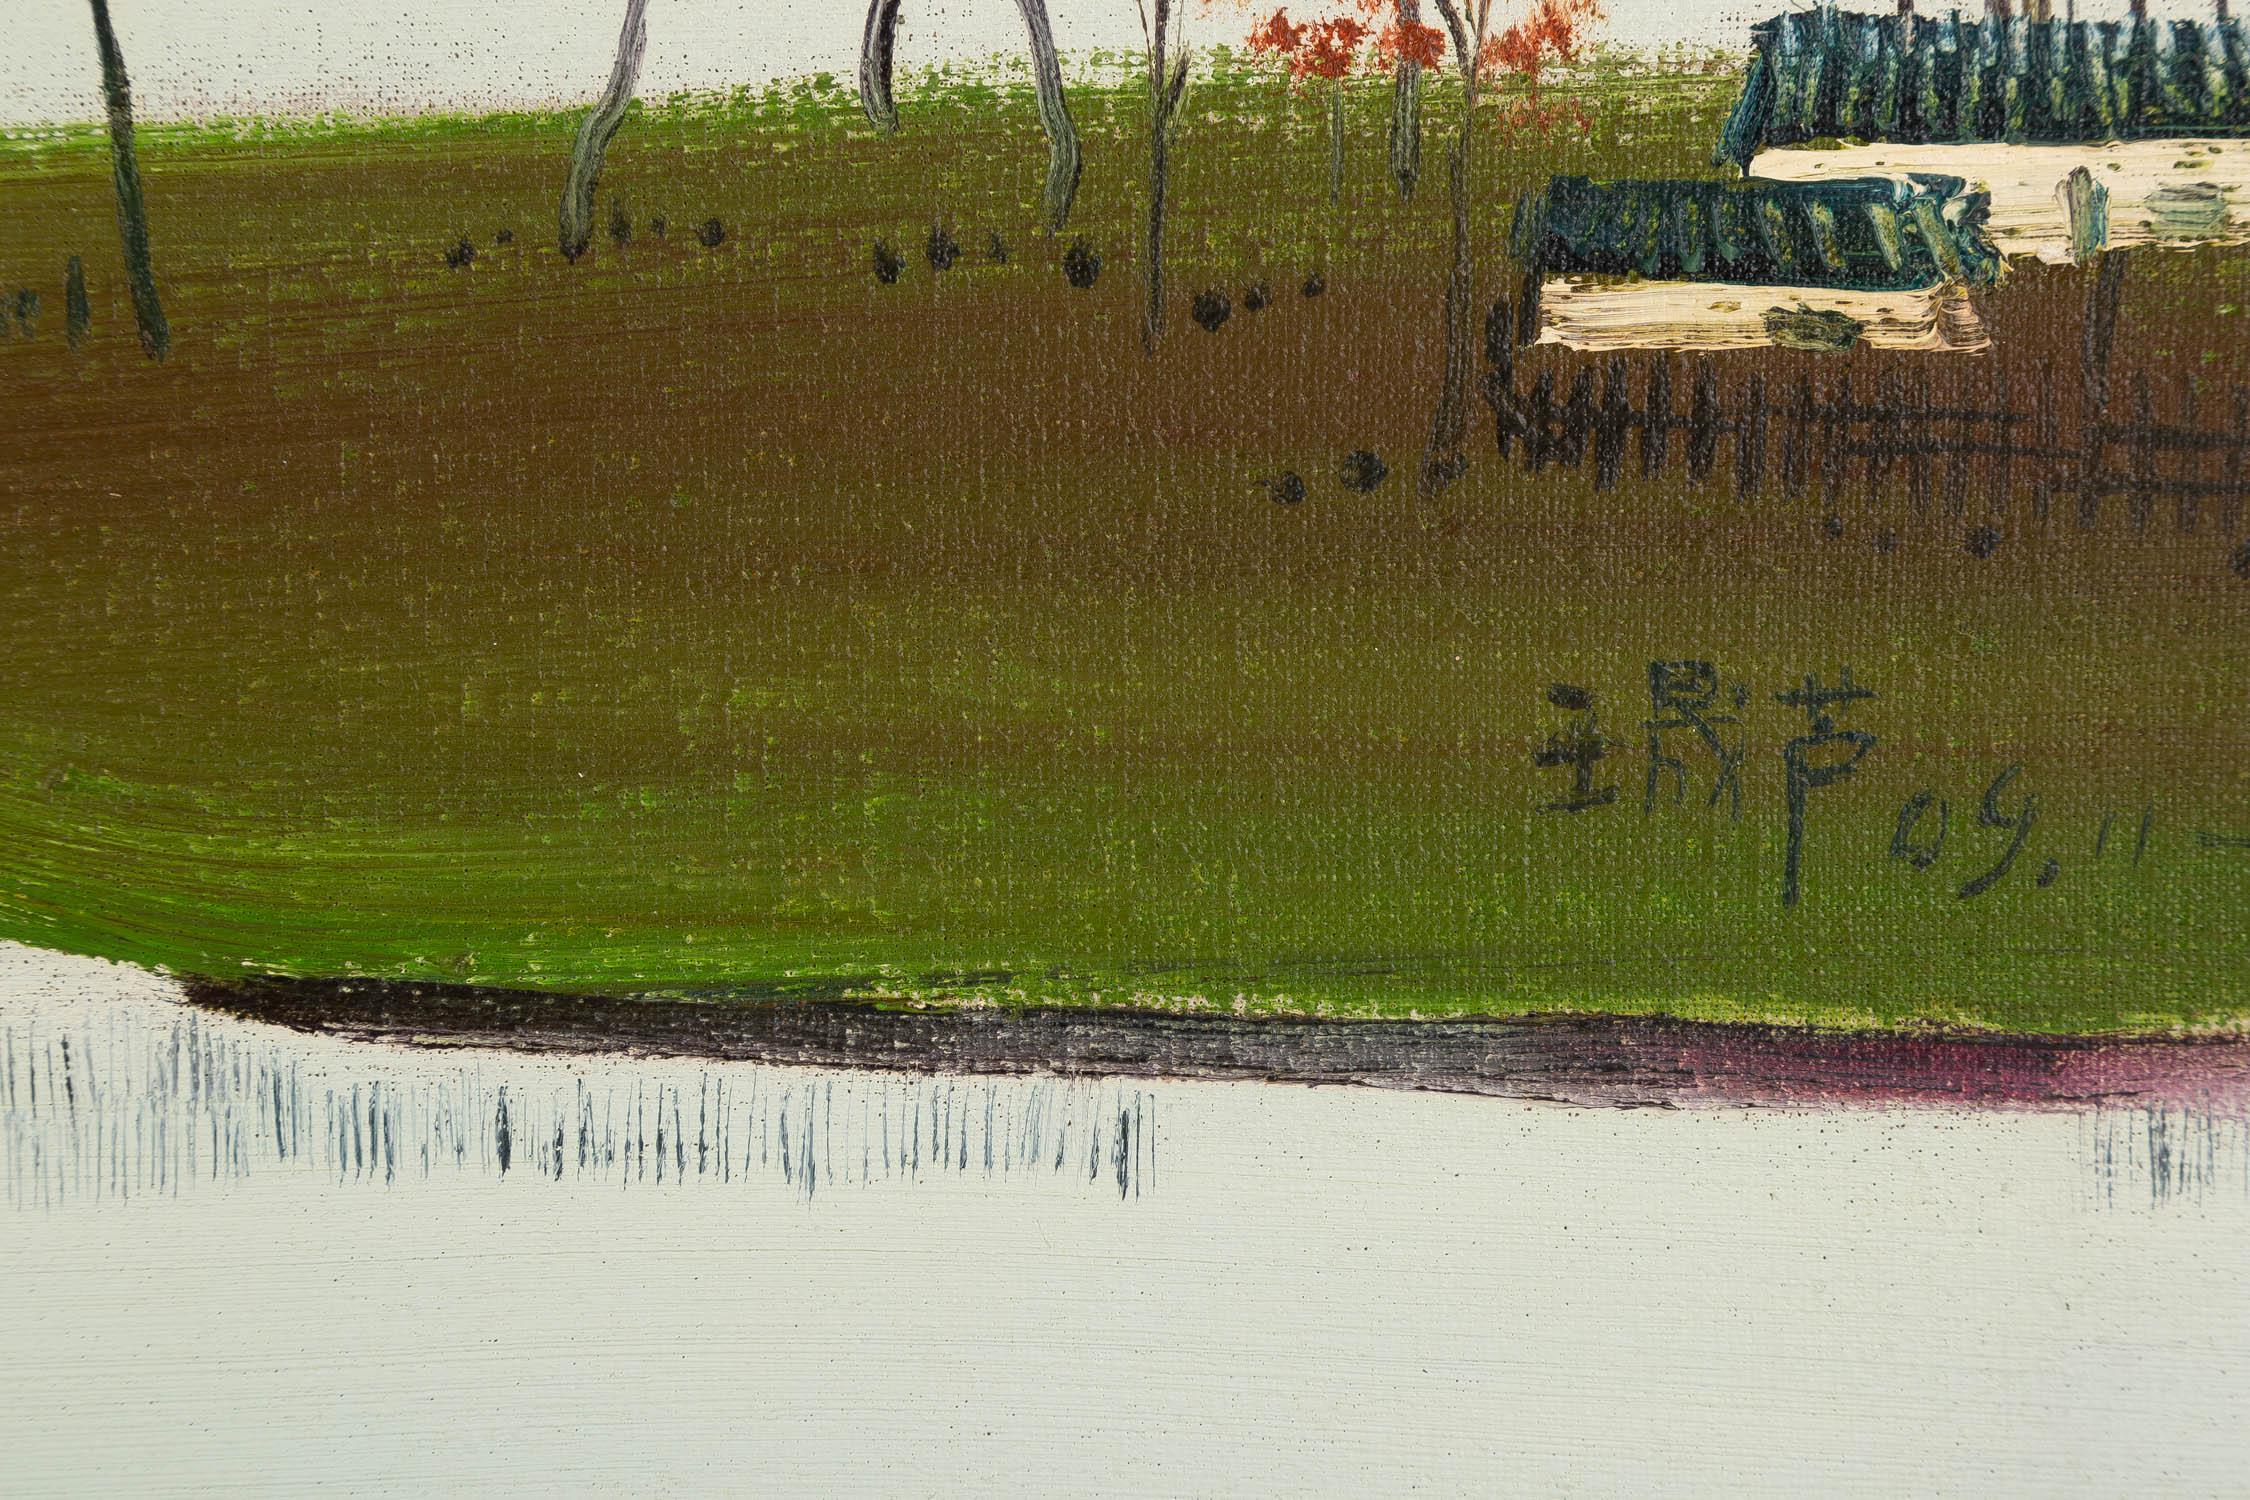 Shenglu Wang Impressionist Original Oil Painting 